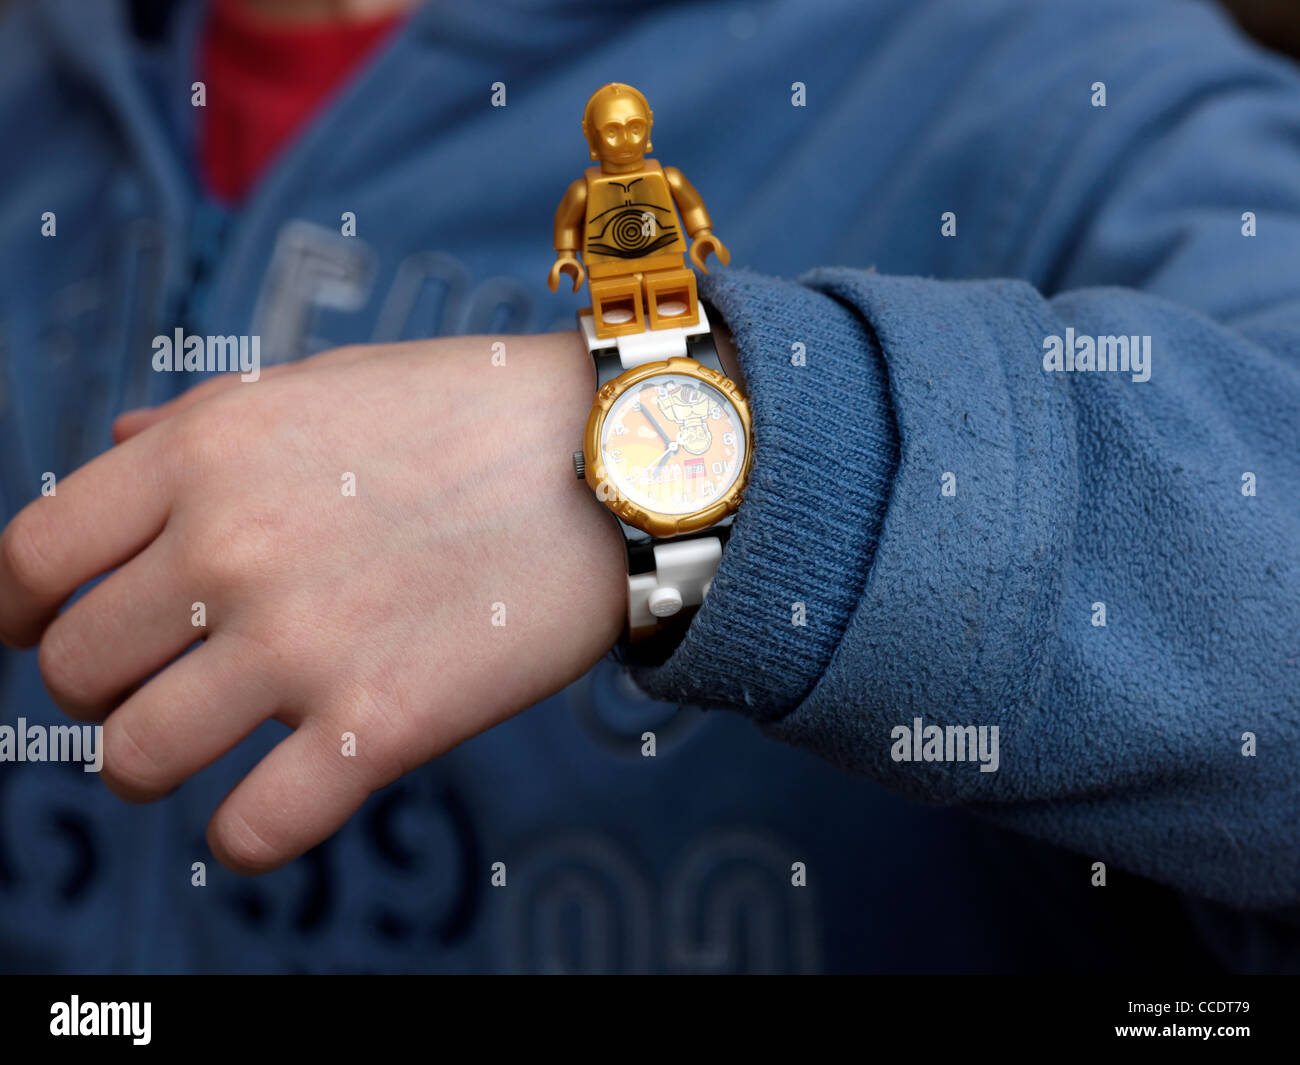 Morgenøvelser Habitat dechifrere Star Wars Lego Watch With C3PO On A Boys Wrist Stock Photo - Alamy